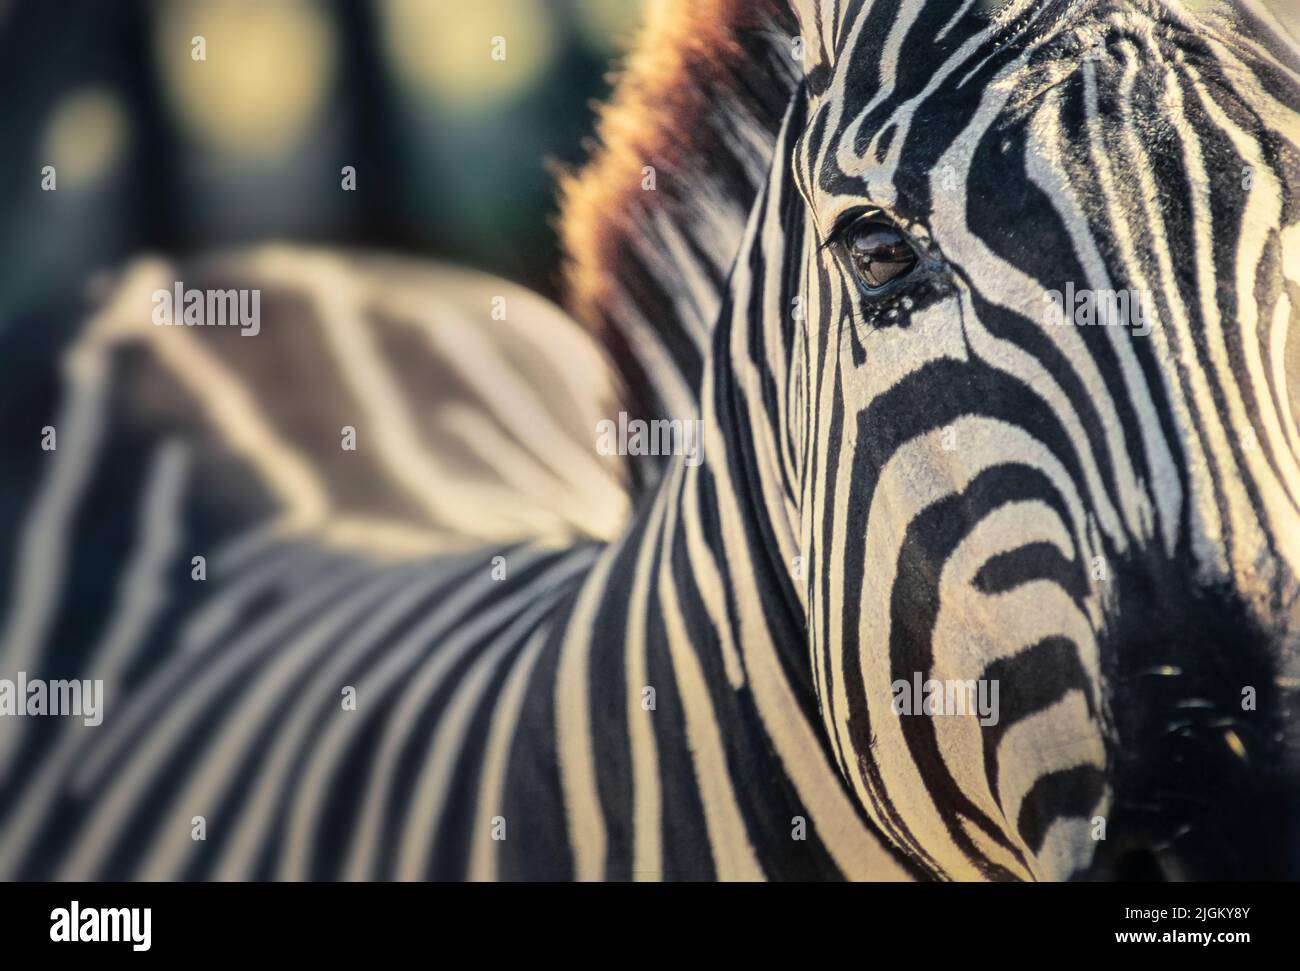 GREVY Zebra Stockfoto